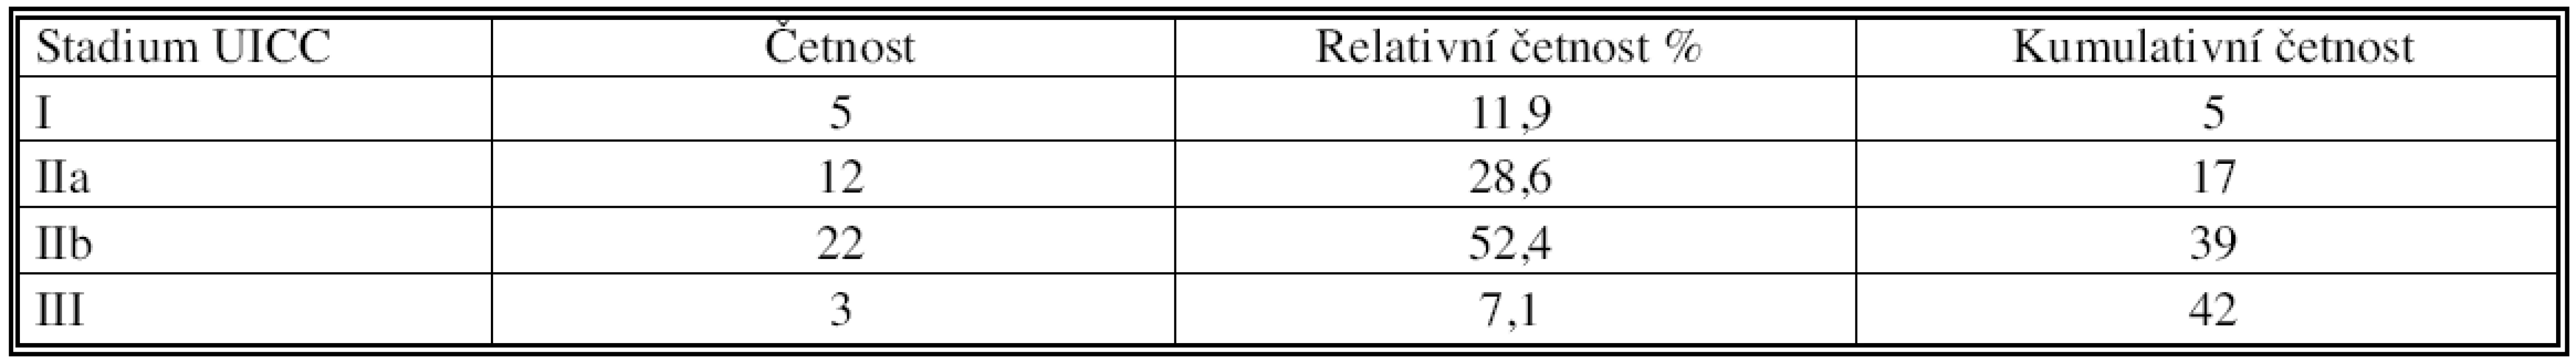 Četnostní tabulka podle stadií TNM VI. vydání, UICC 2002
Tab. 5. Frequency rates table according to the TNM staging (VIth edition, UICC 2002)